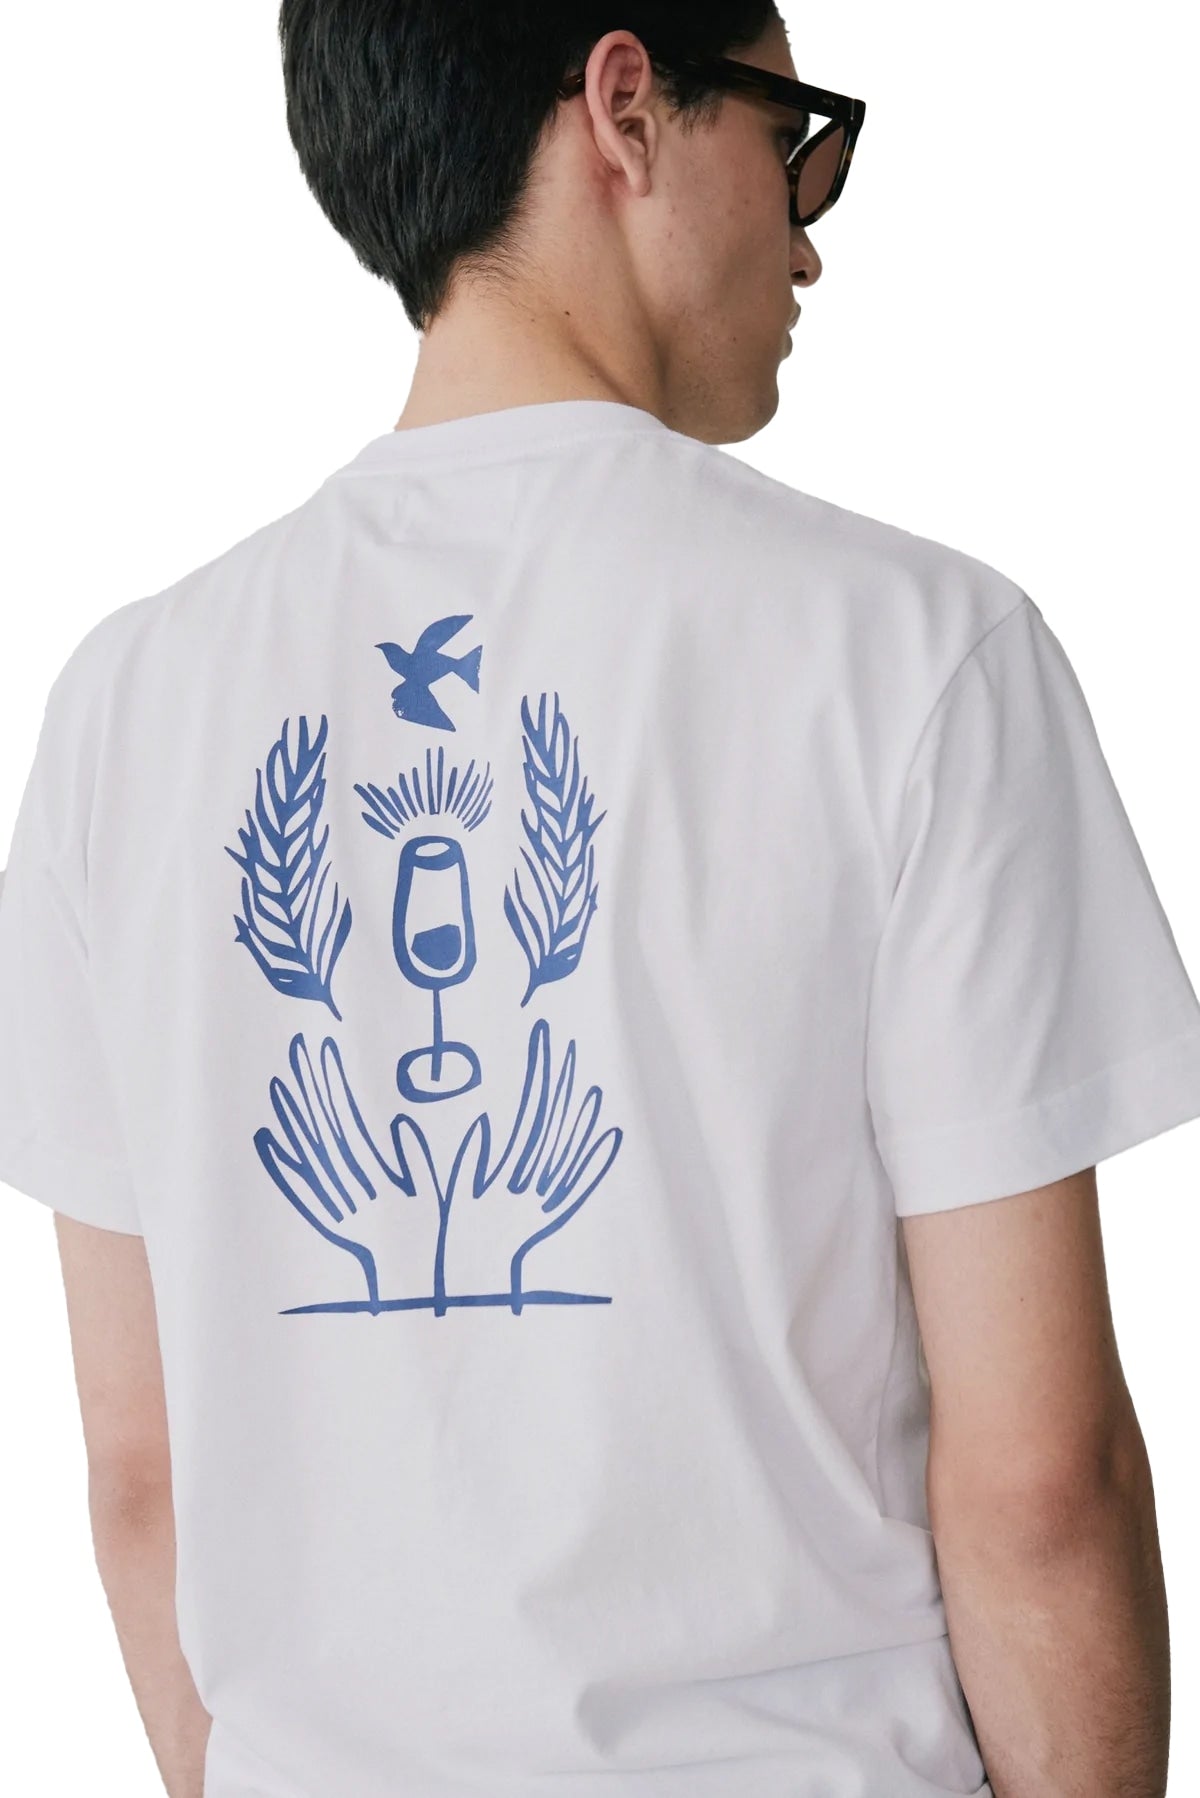 libertine libertine_beat peace t-shirt_white_2_4